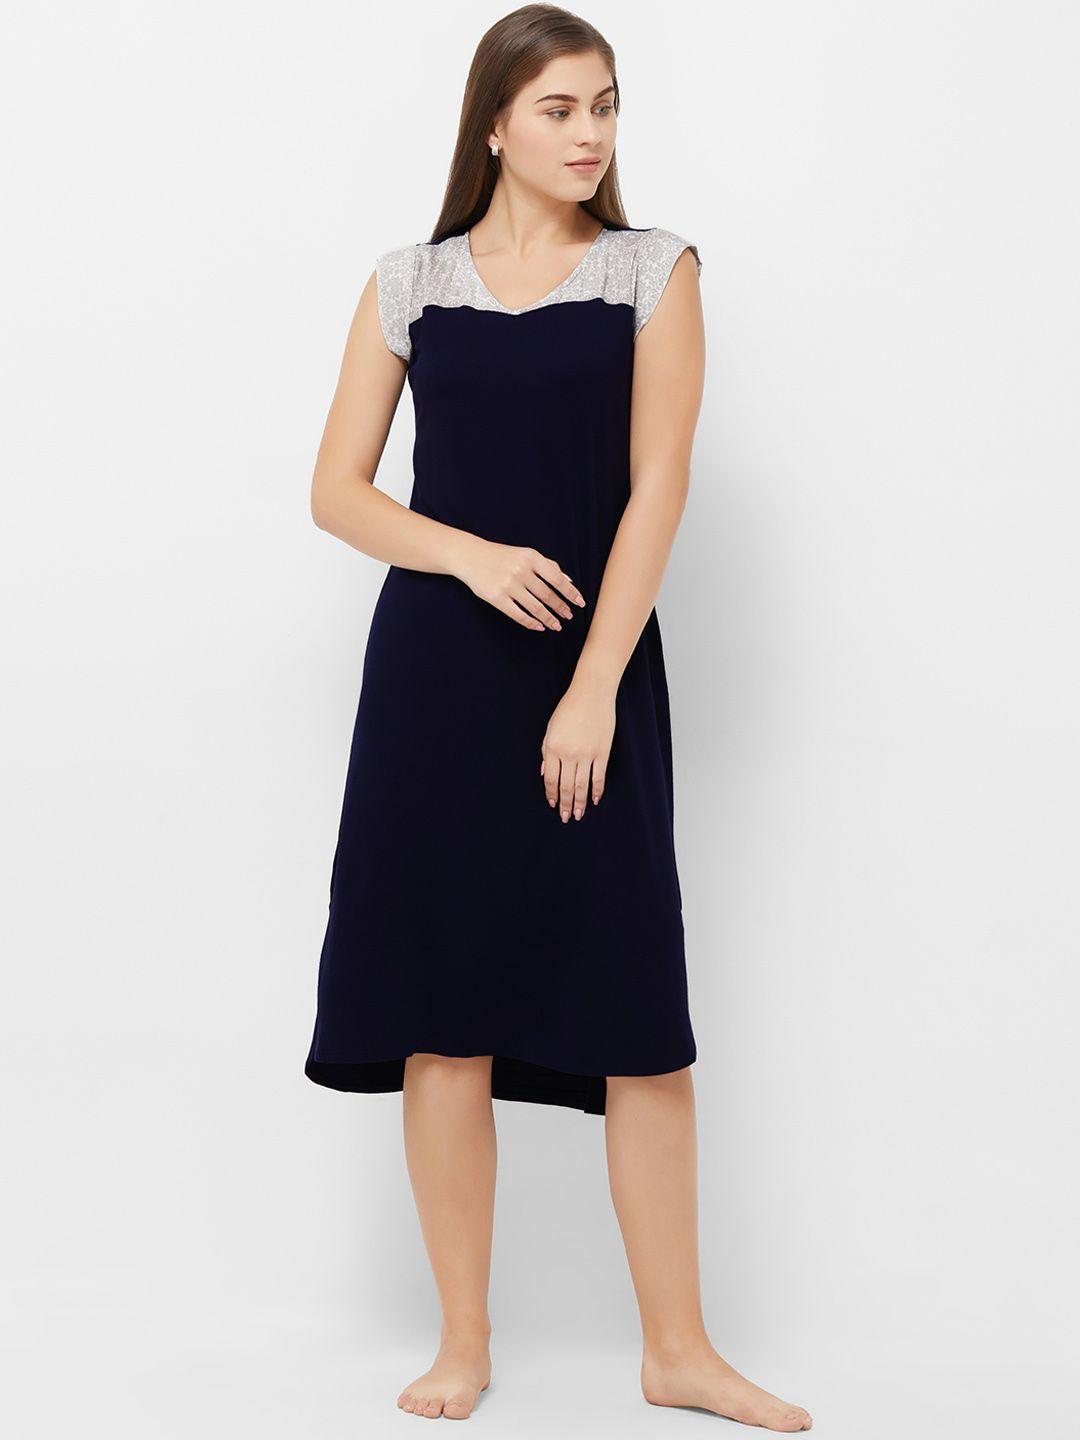 soie navy blue & off-white printed nightdress